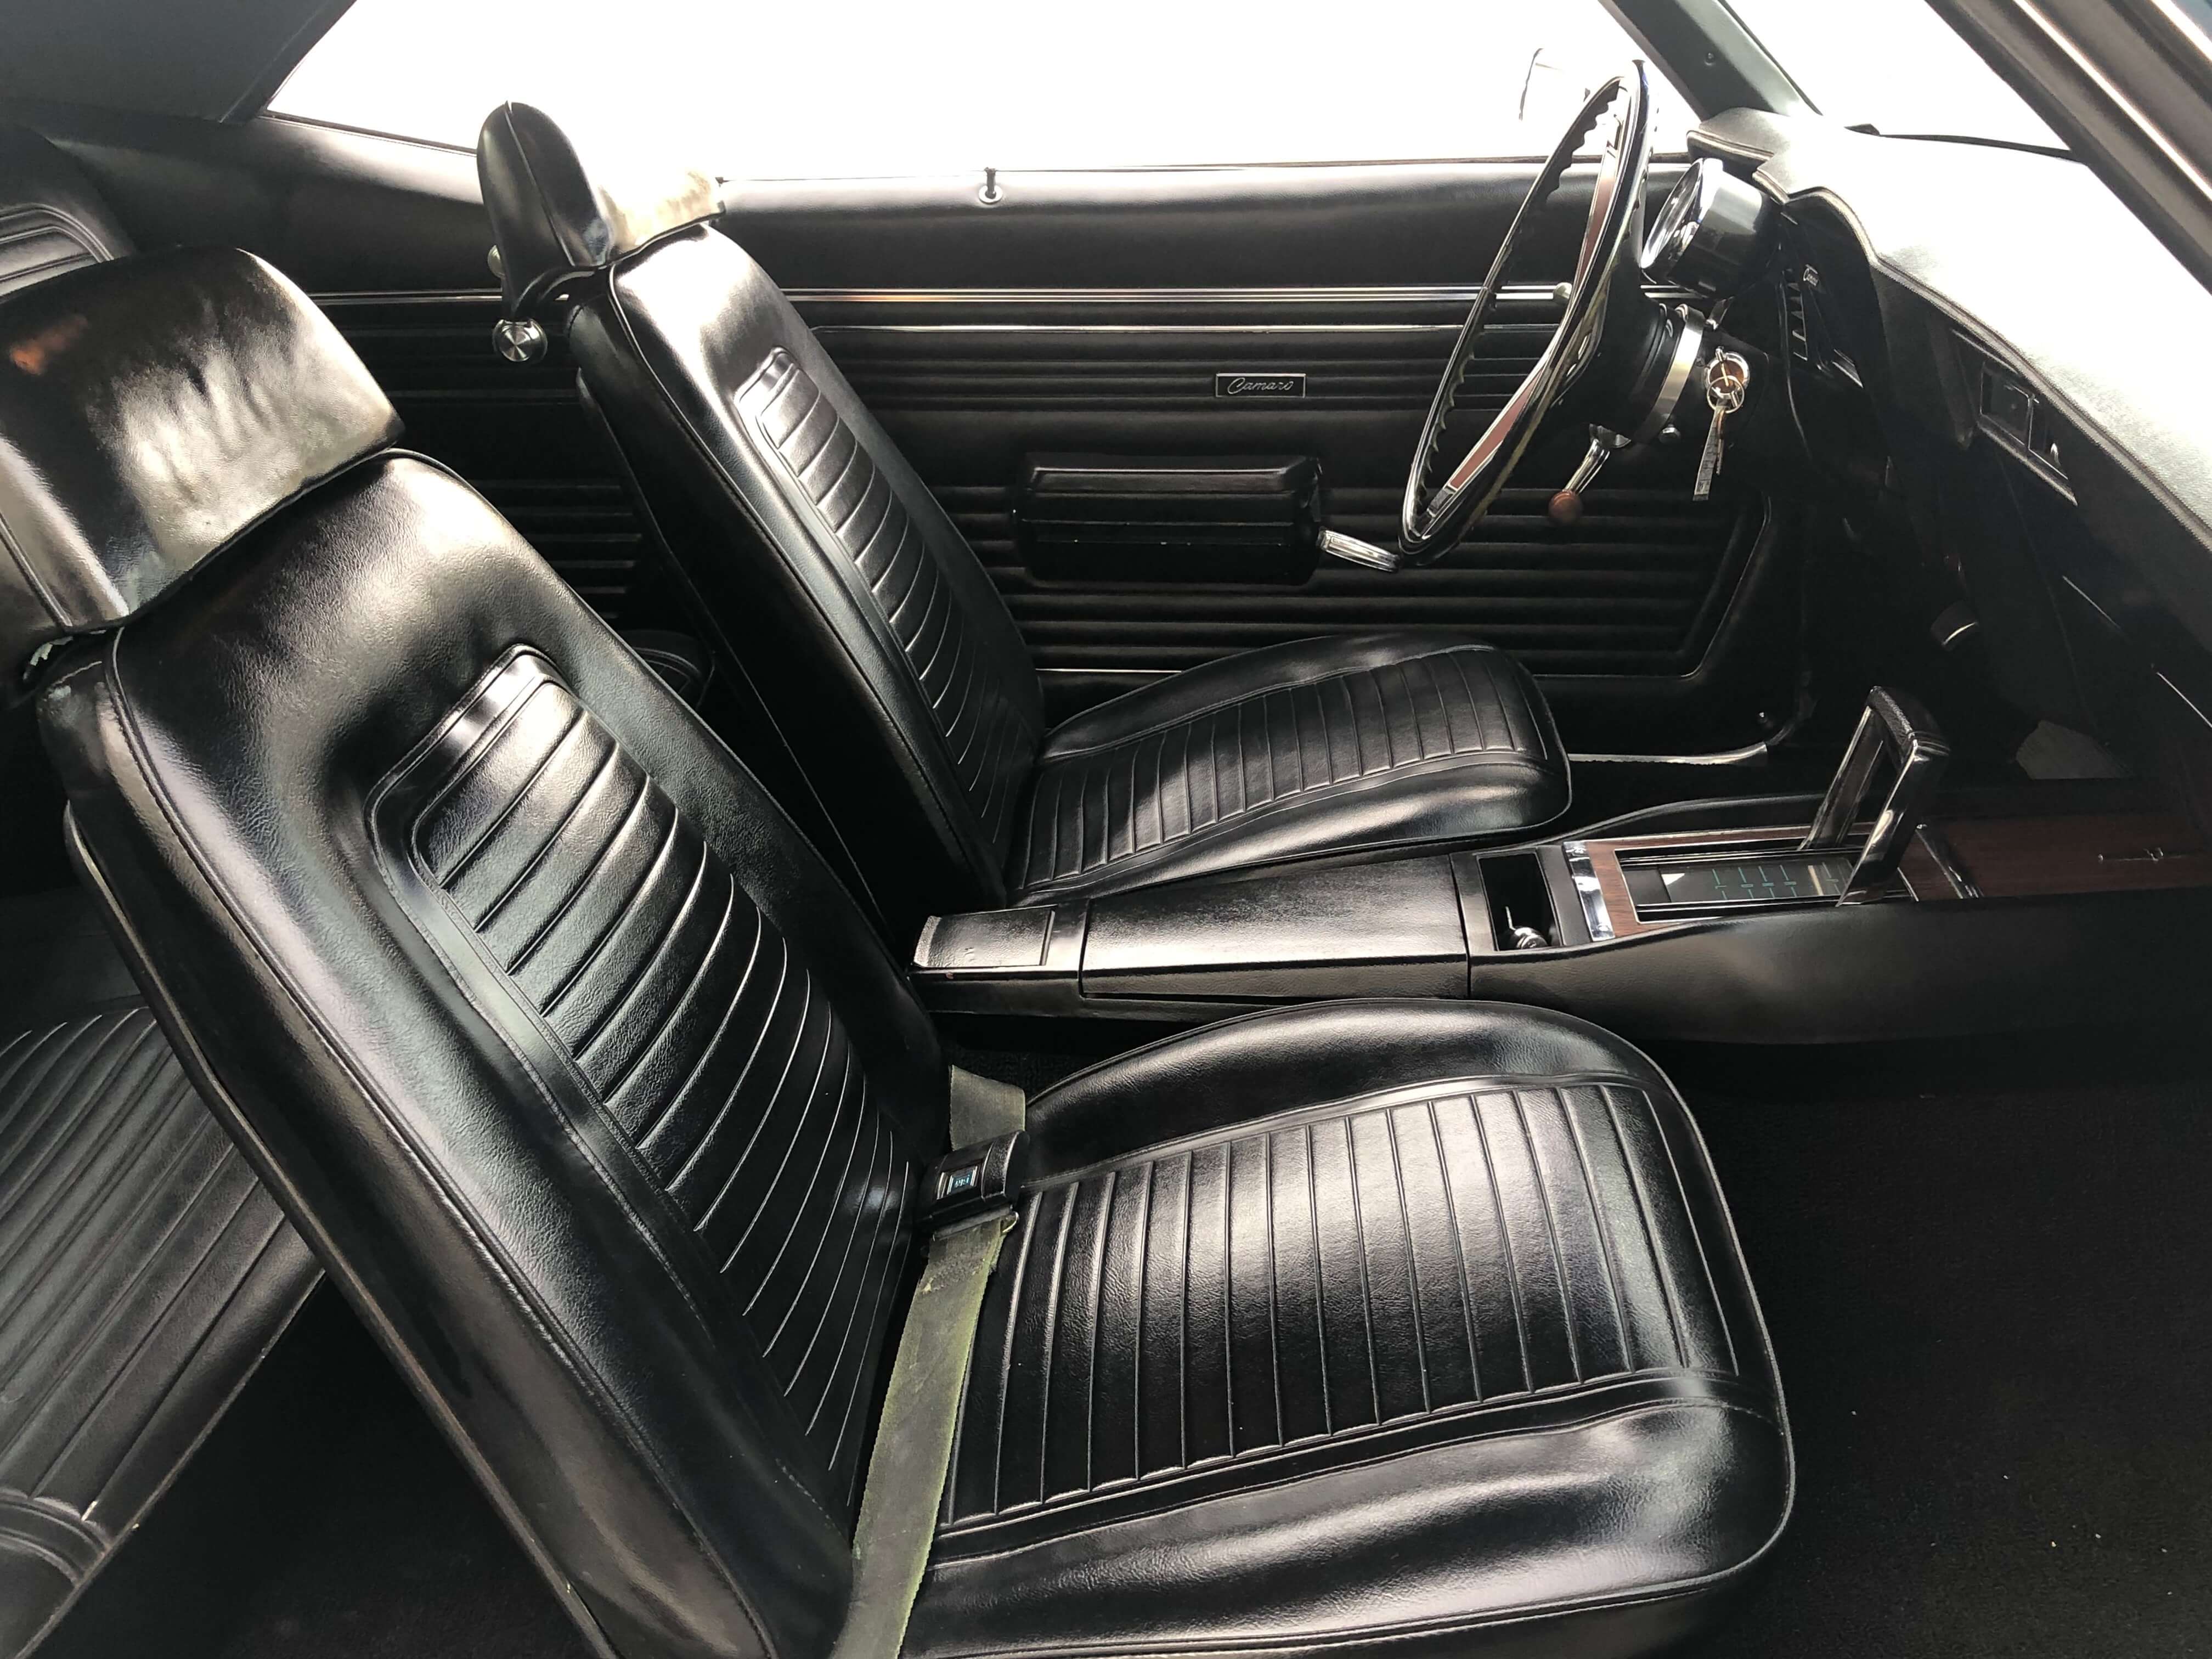 1969 Chevrolet Camaro interior